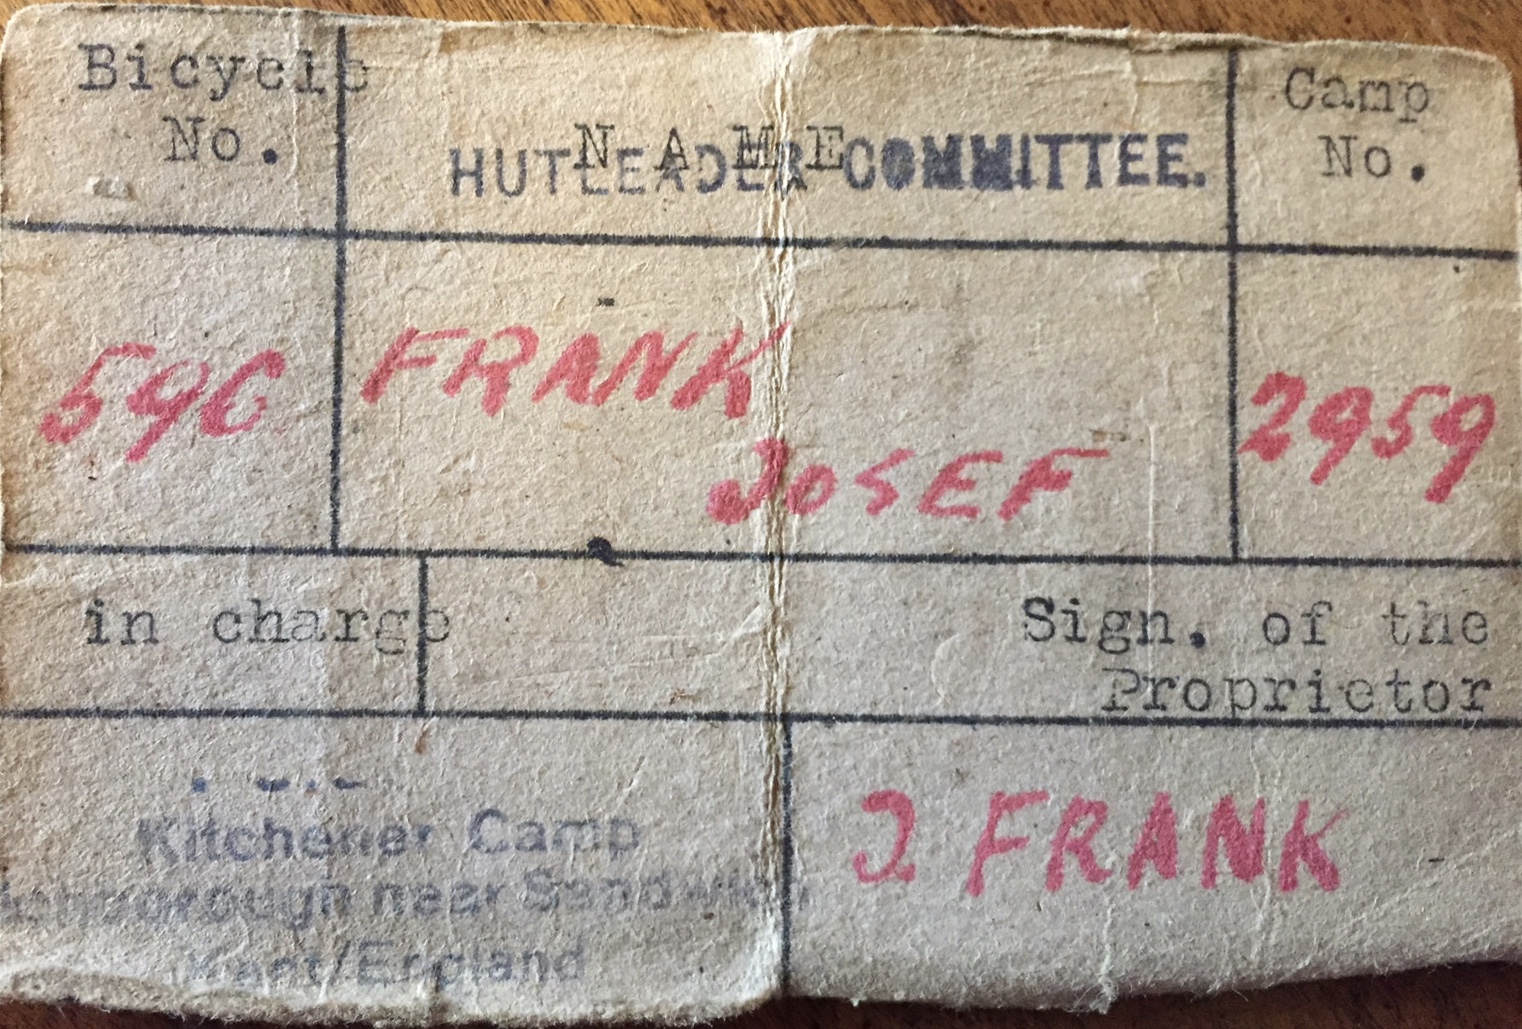 Richborough transit camp, Josef Frank, Hut leader Committee, Bicycle no. 596, Camp no. 2959,